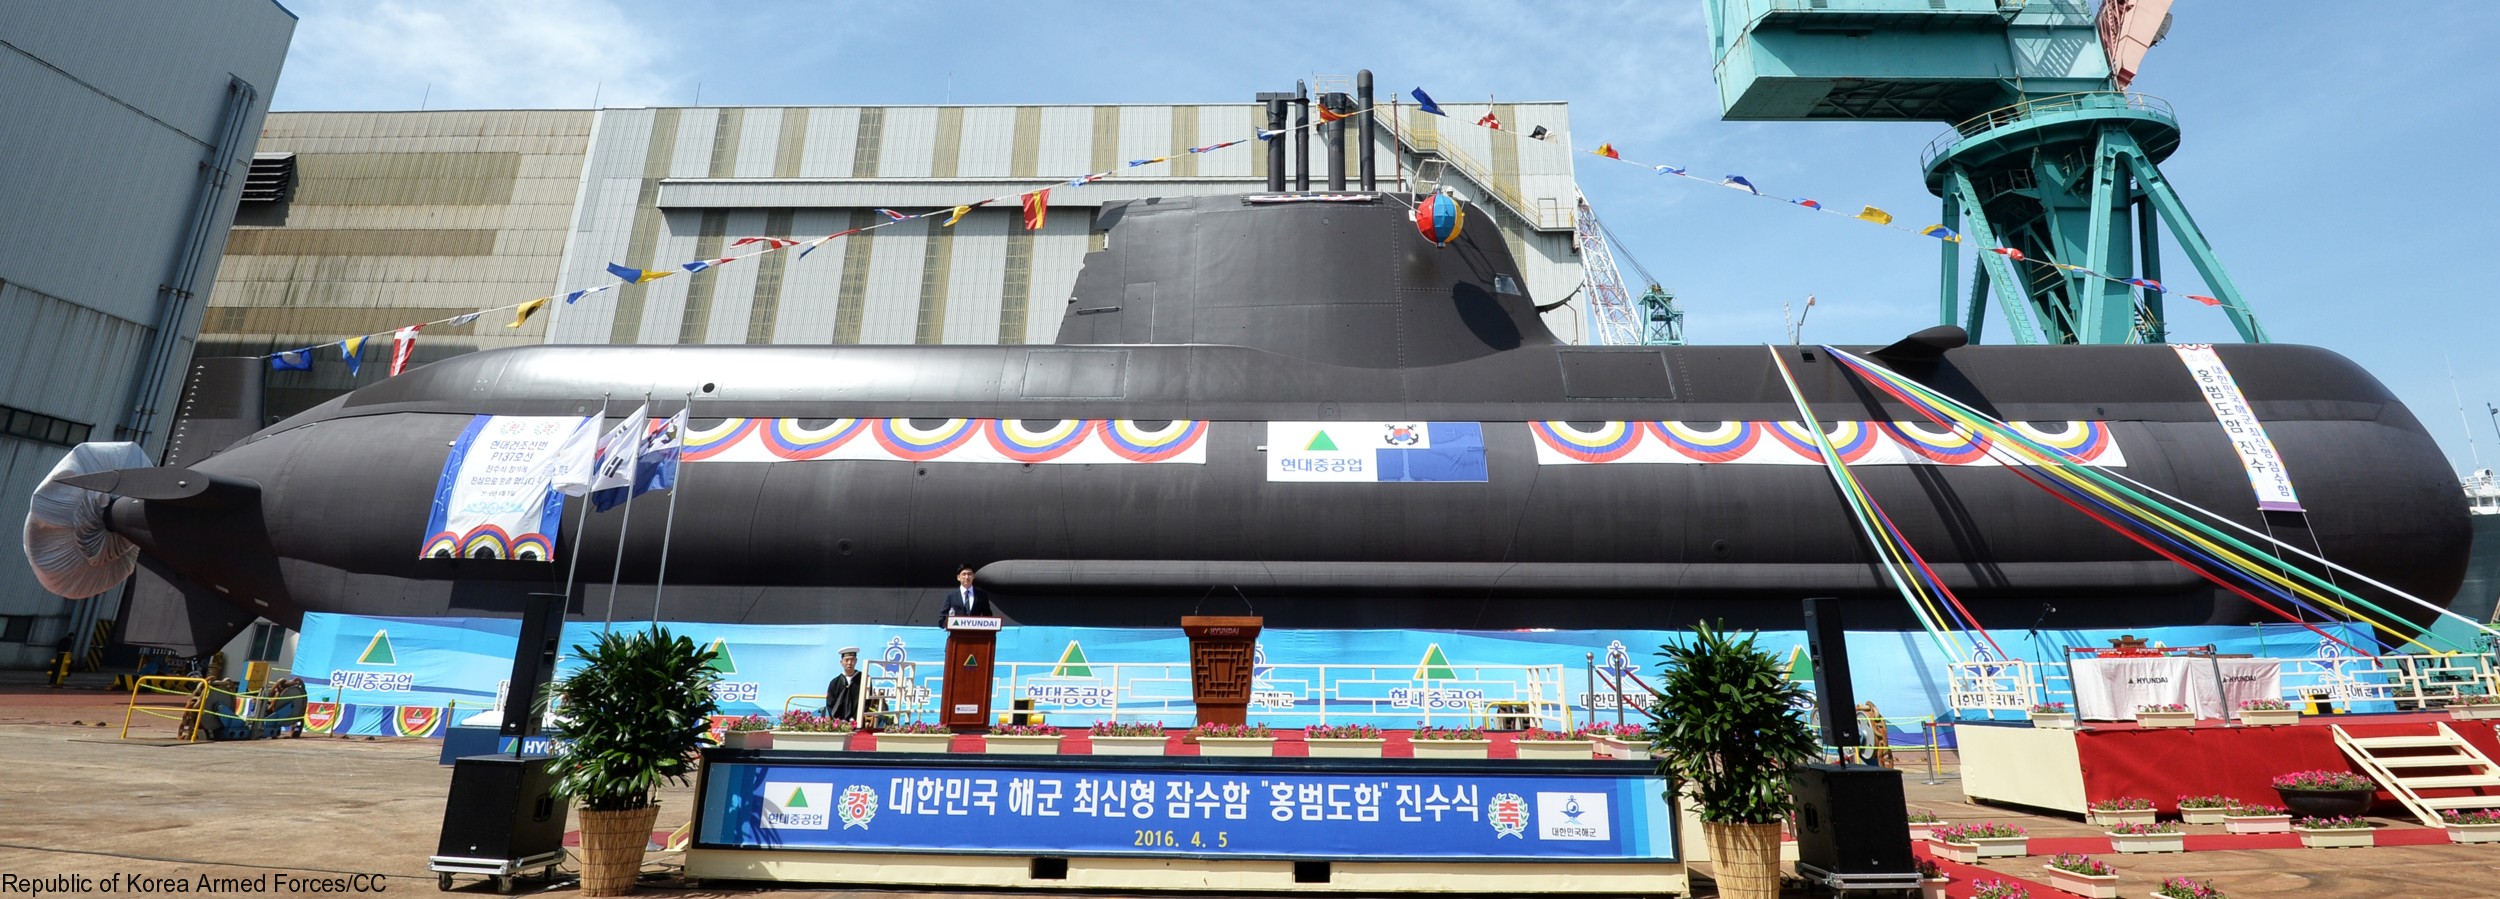 ss-079 roks hong beom-do son won-il class attack submarine type-214 kss-ii republic of korea navy rokn torpedo ssm missile 02